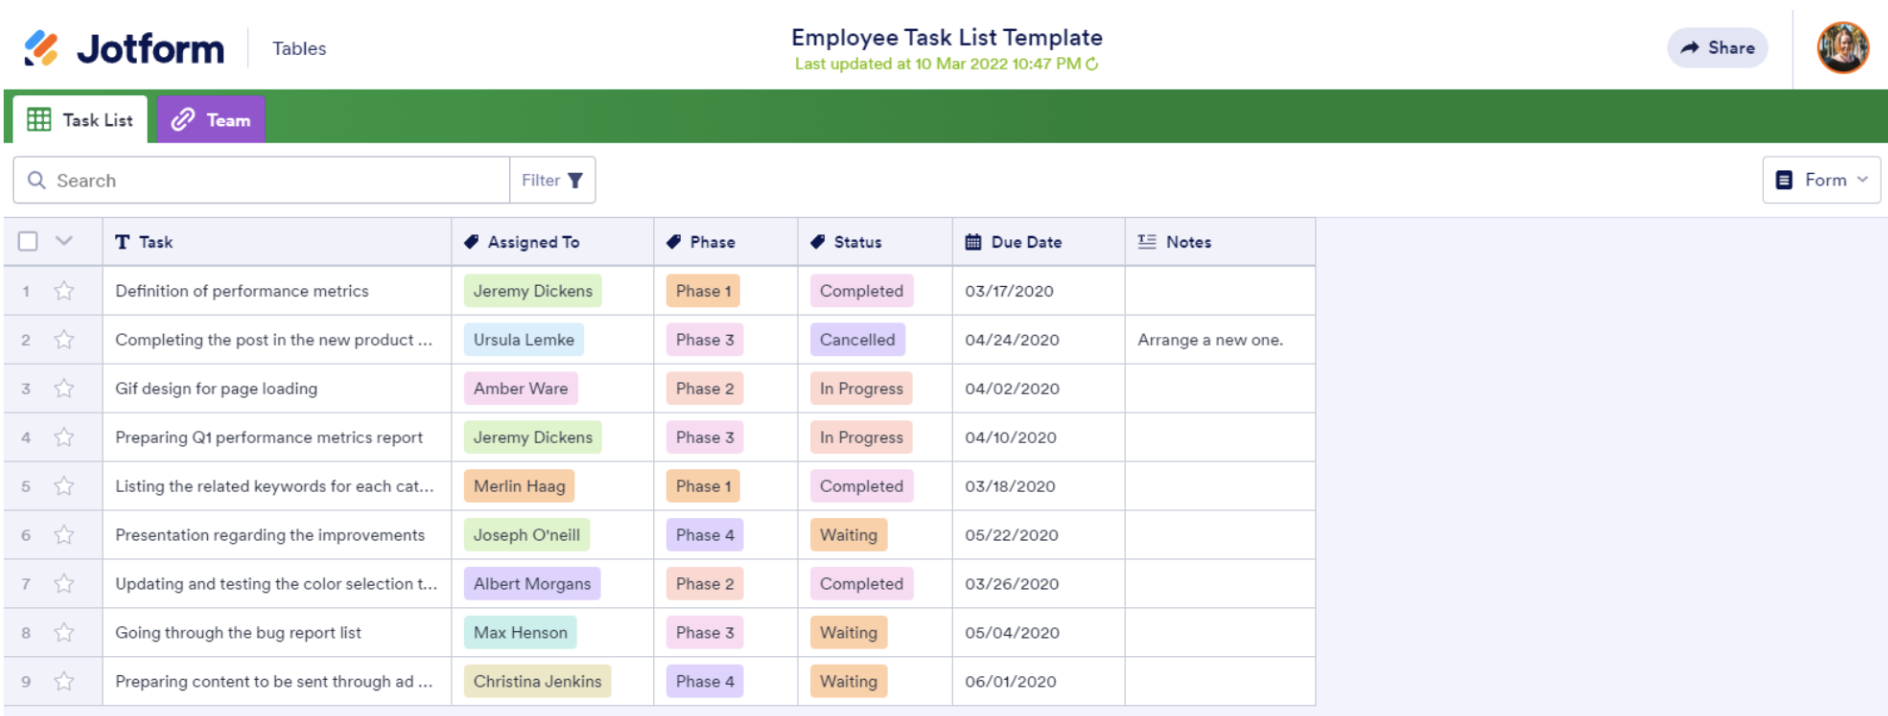 Image of Employee Task List Template